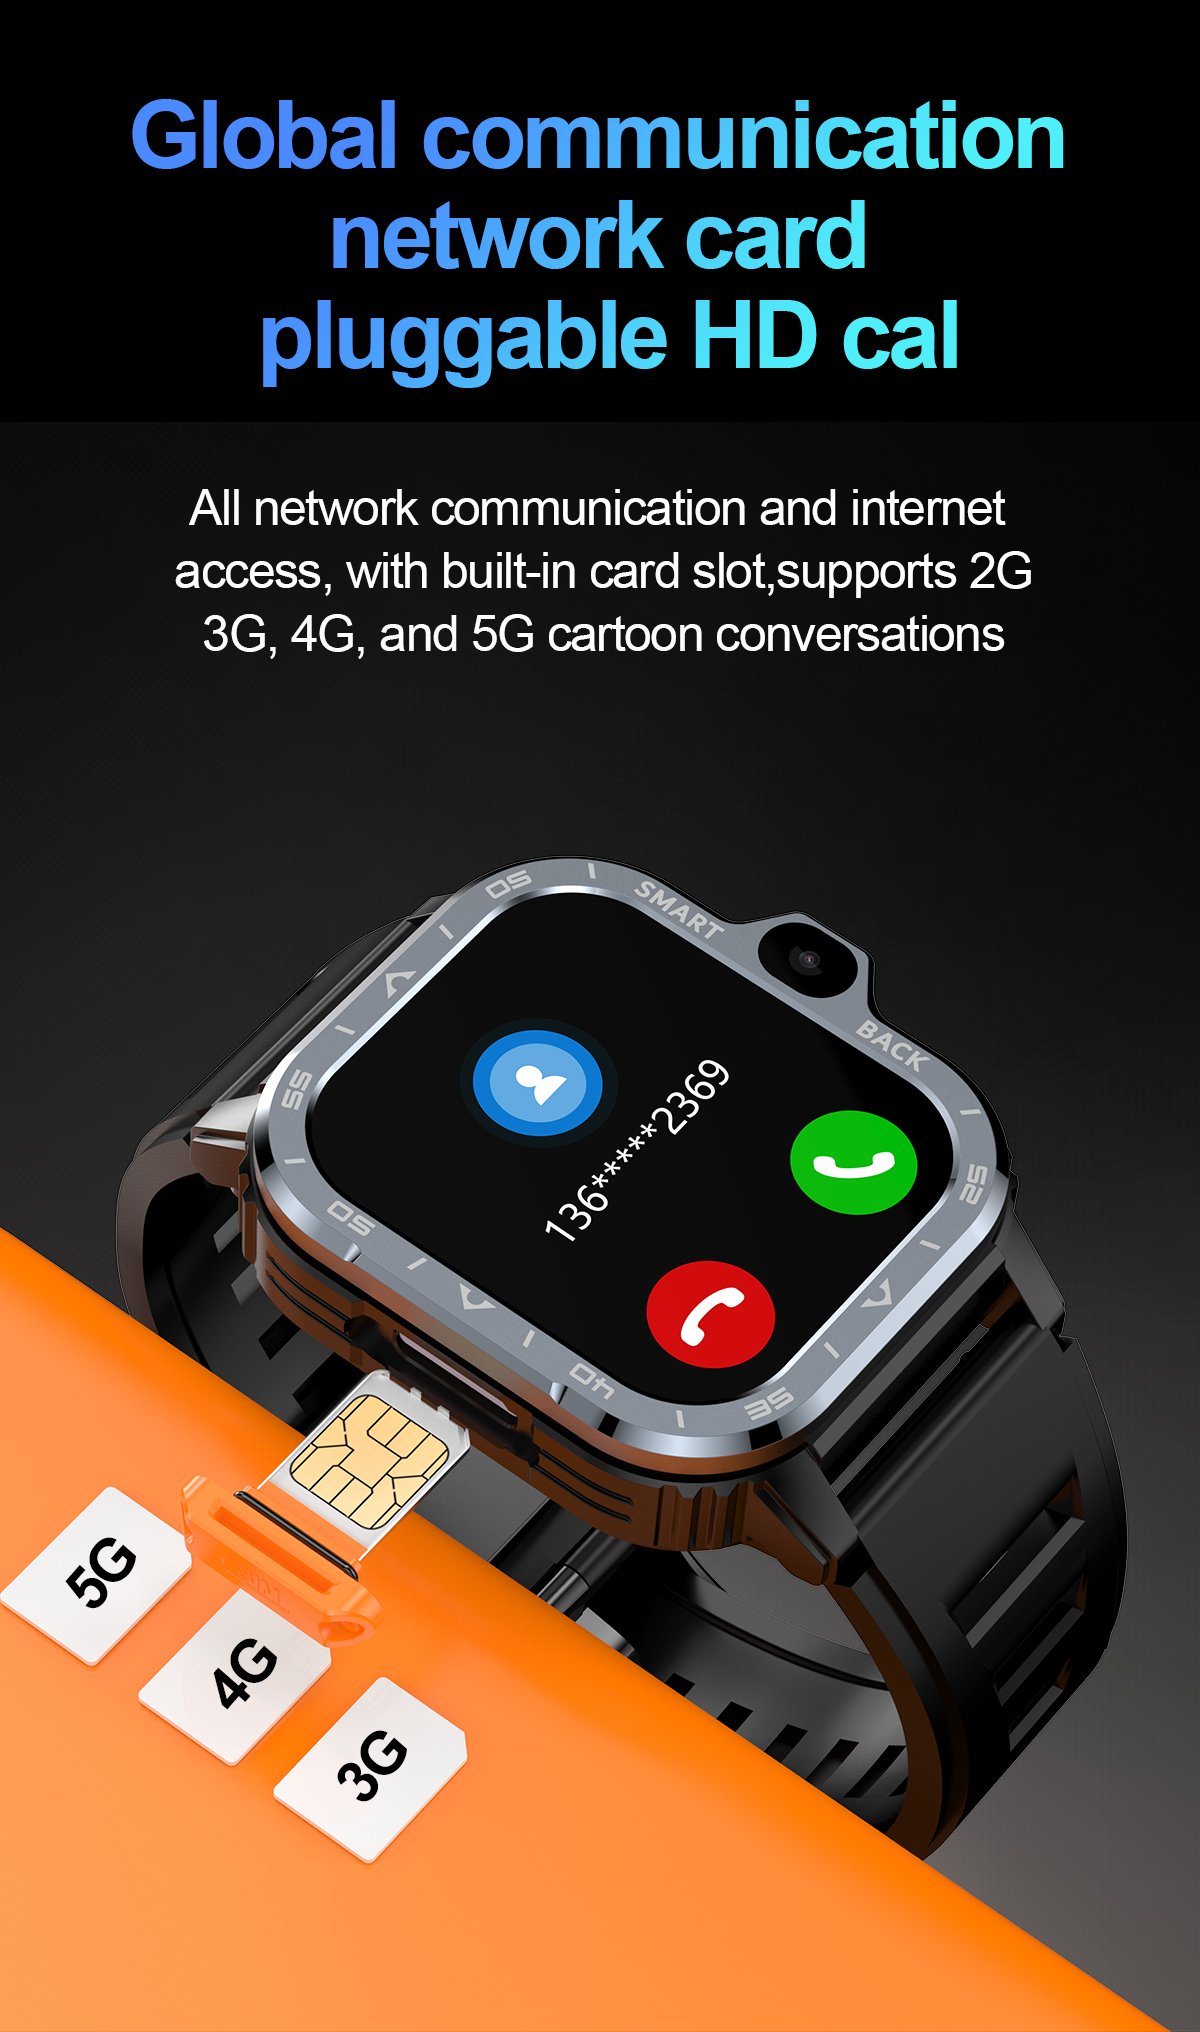 Smartwatch PGD e PG999: confronto tra i migliori smartwatch Android 4G-Shenzhen Shengye Technology Co., Ltd